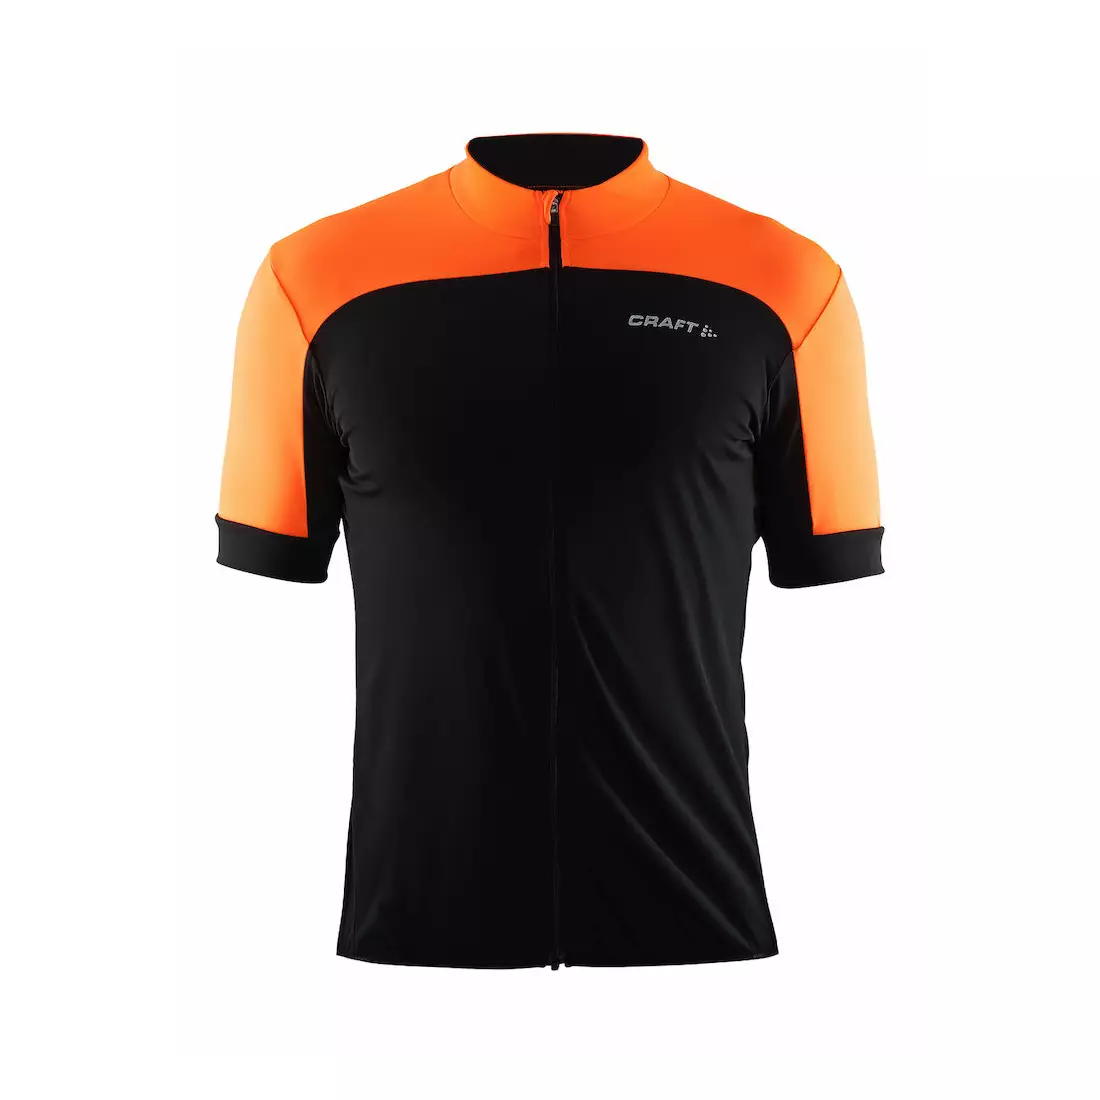 CRAFT Balance 1905007-9576 - men's cycling jersey